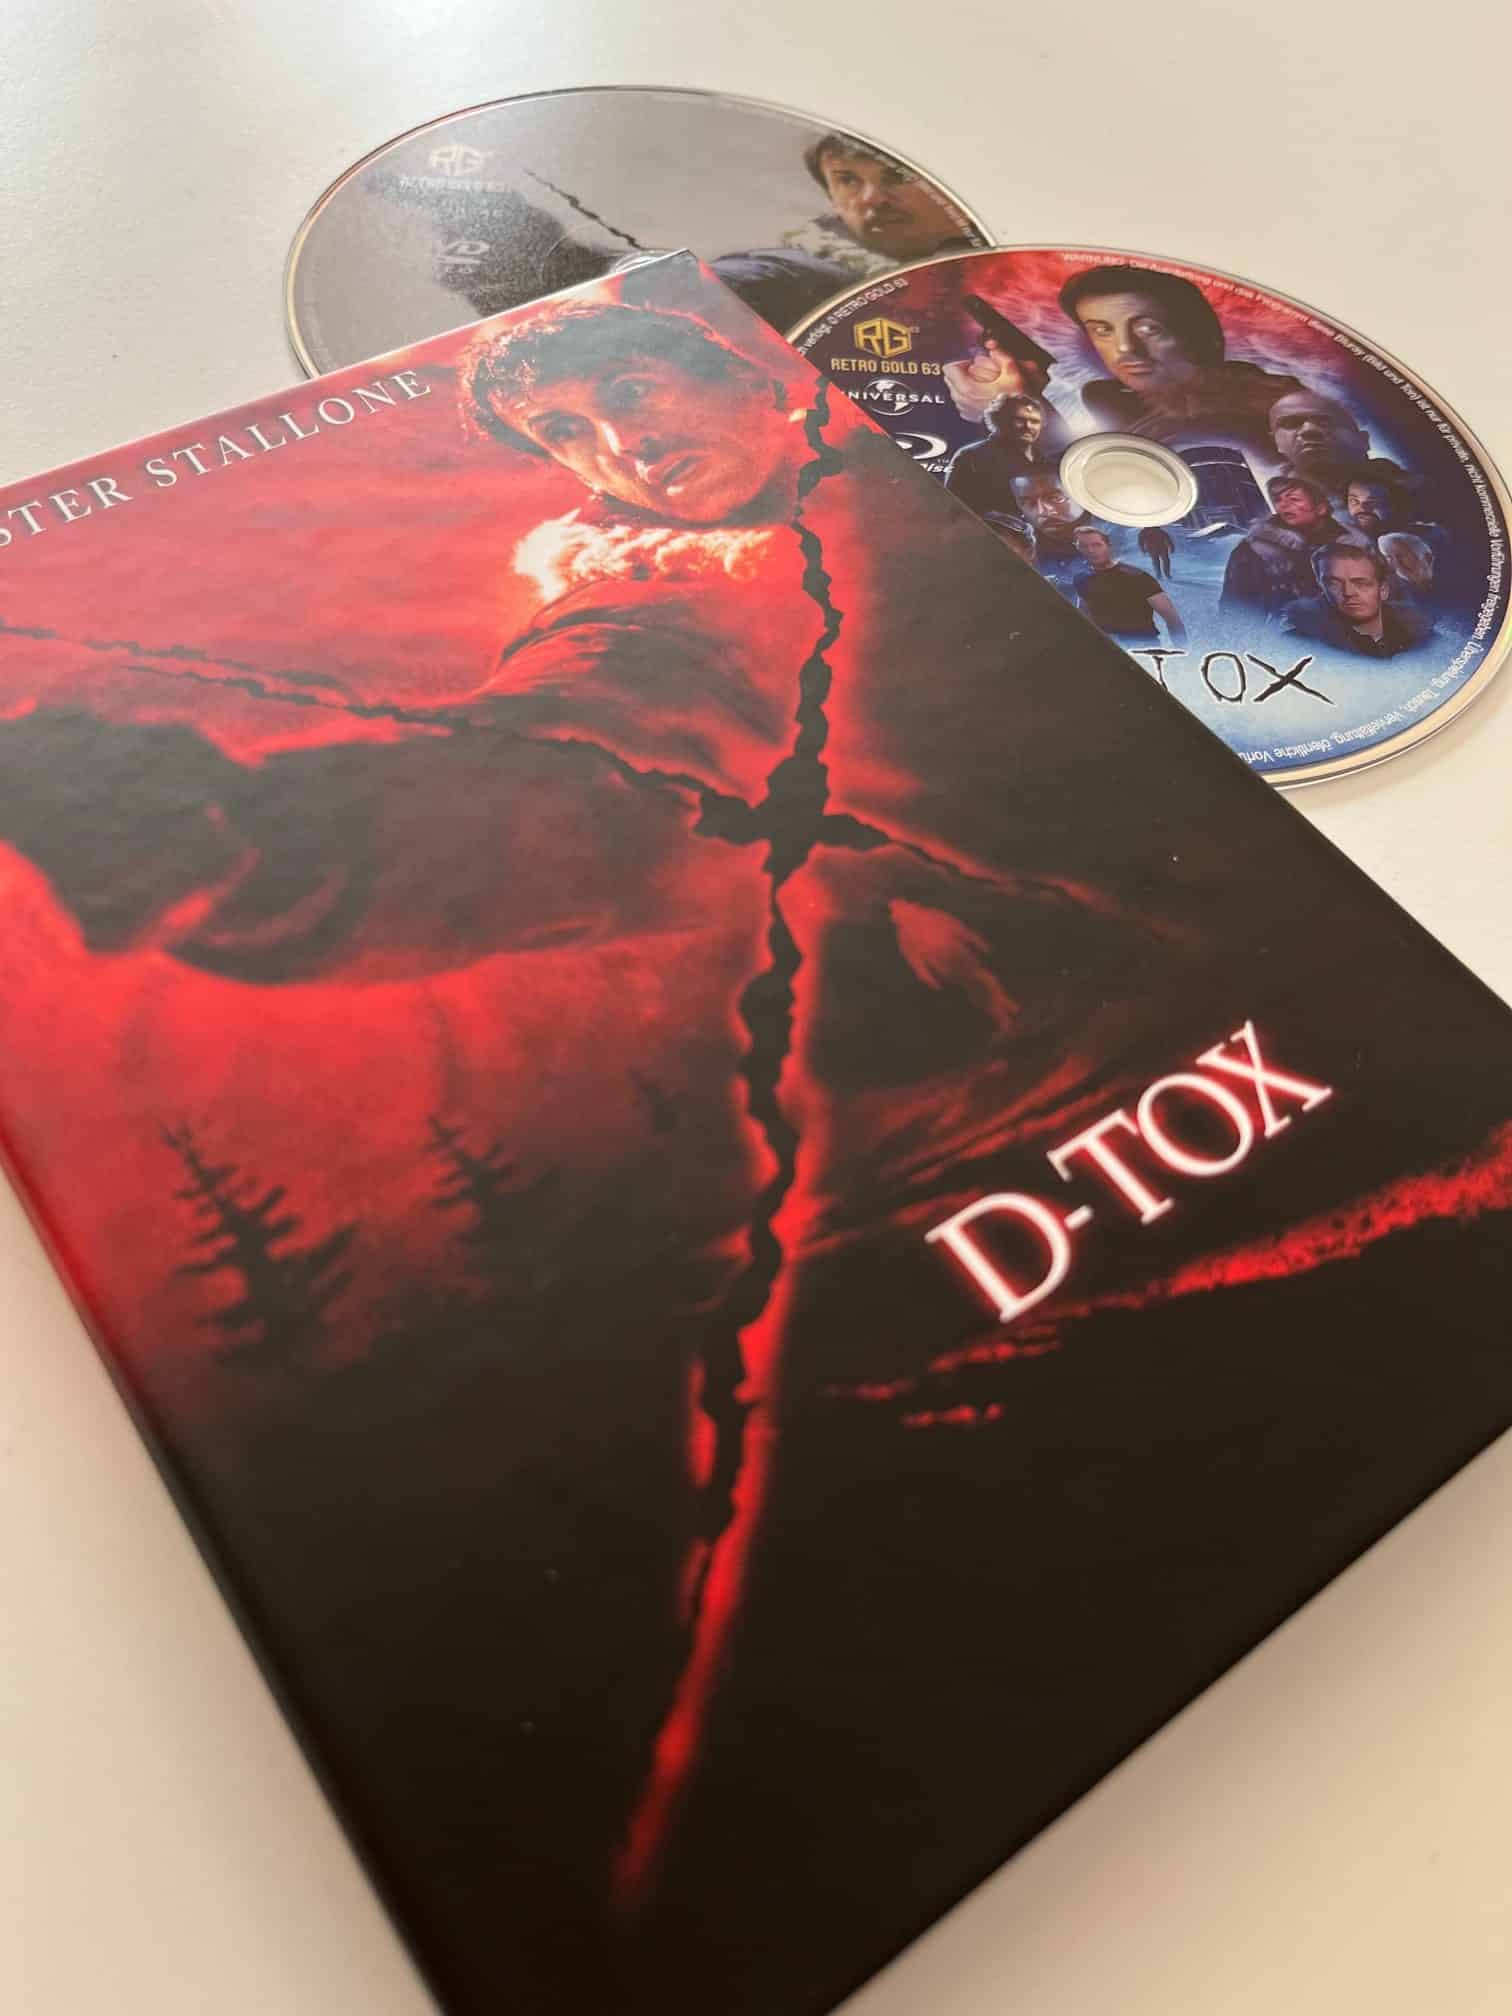 [Review] D-Tox (2002) mit Sylvester Stallone (im Blu-ray- und DVD-Mediabook)